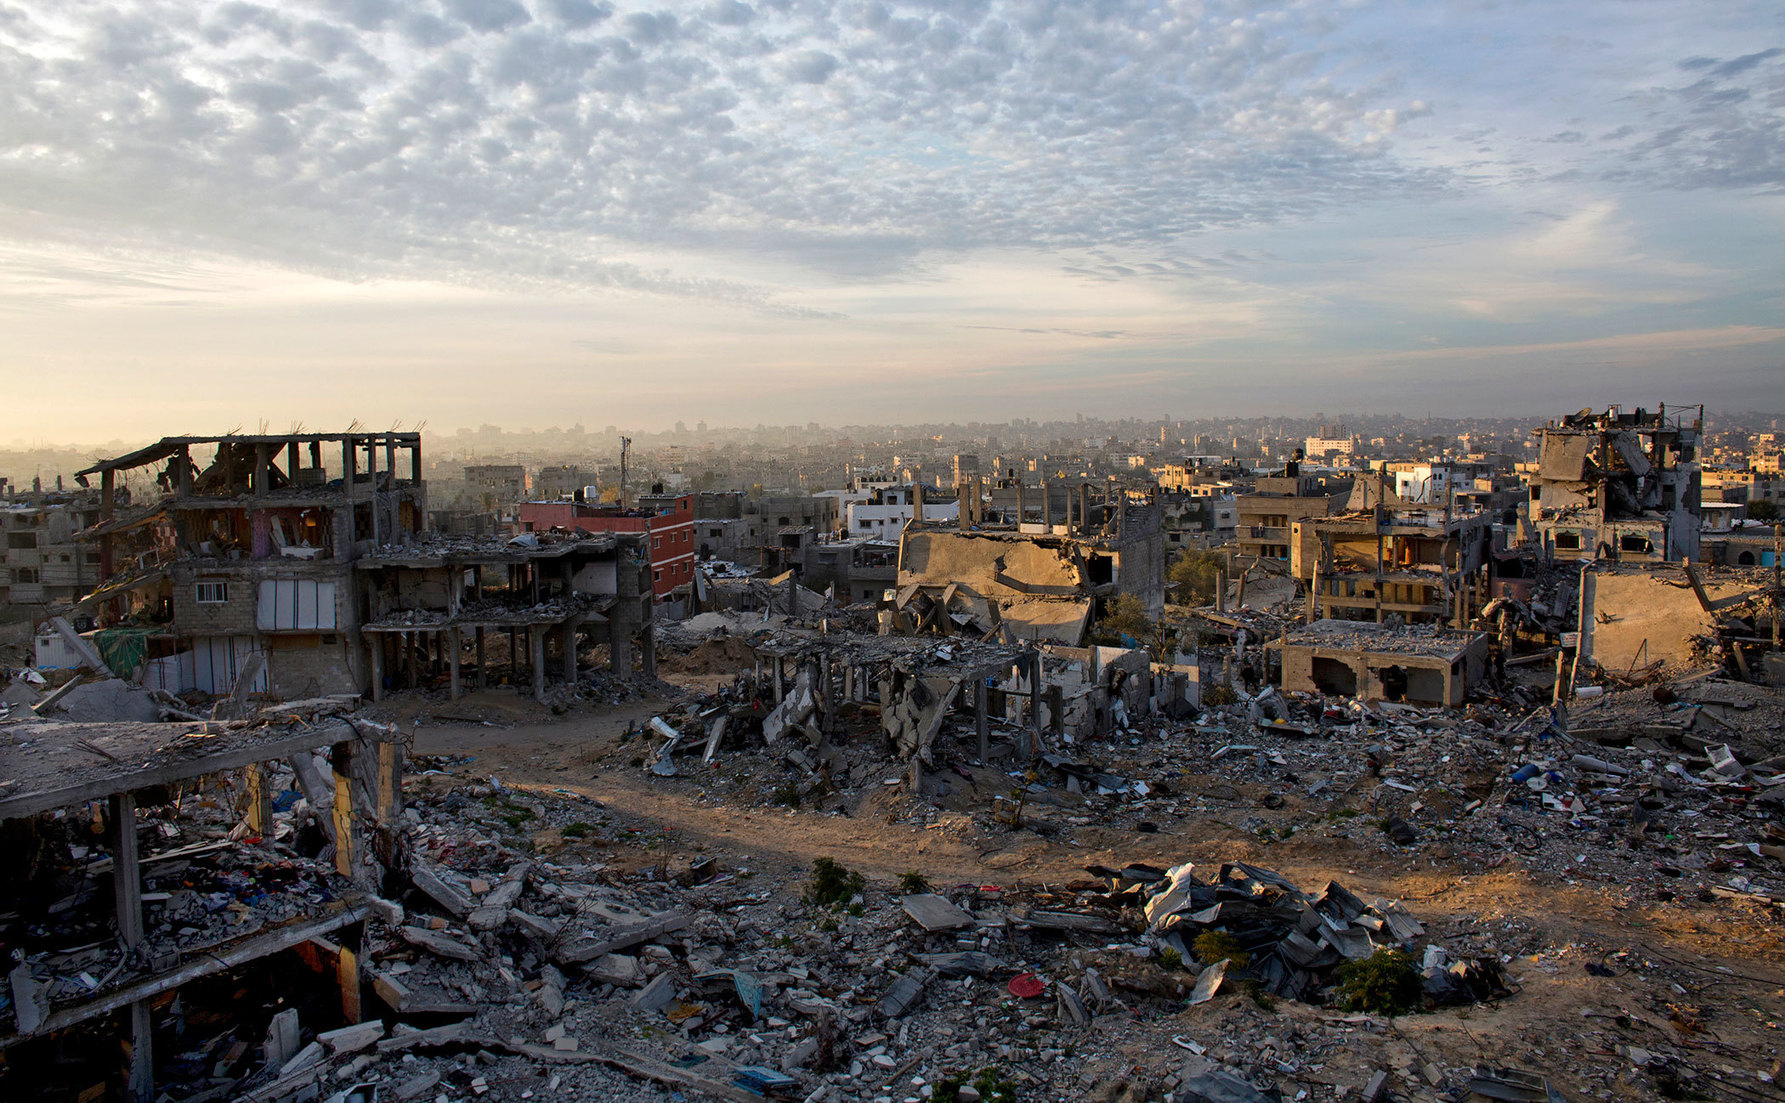 Half a year after devastating war, life in Gaza seems worse than ever